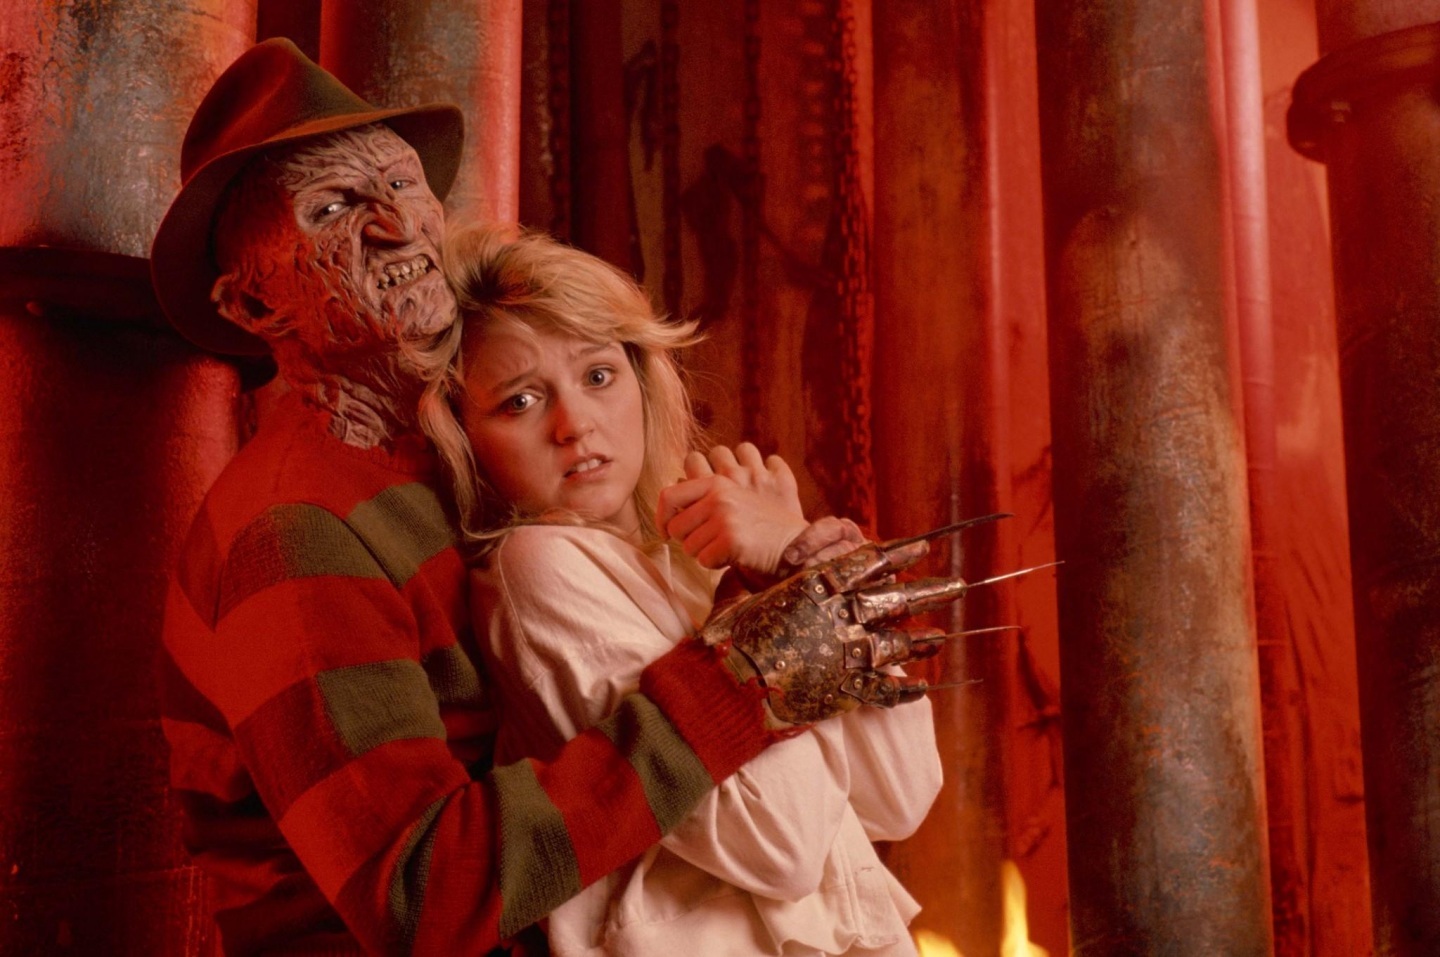 Robert Englund Talks A Nightmare On Elm Street Remakes